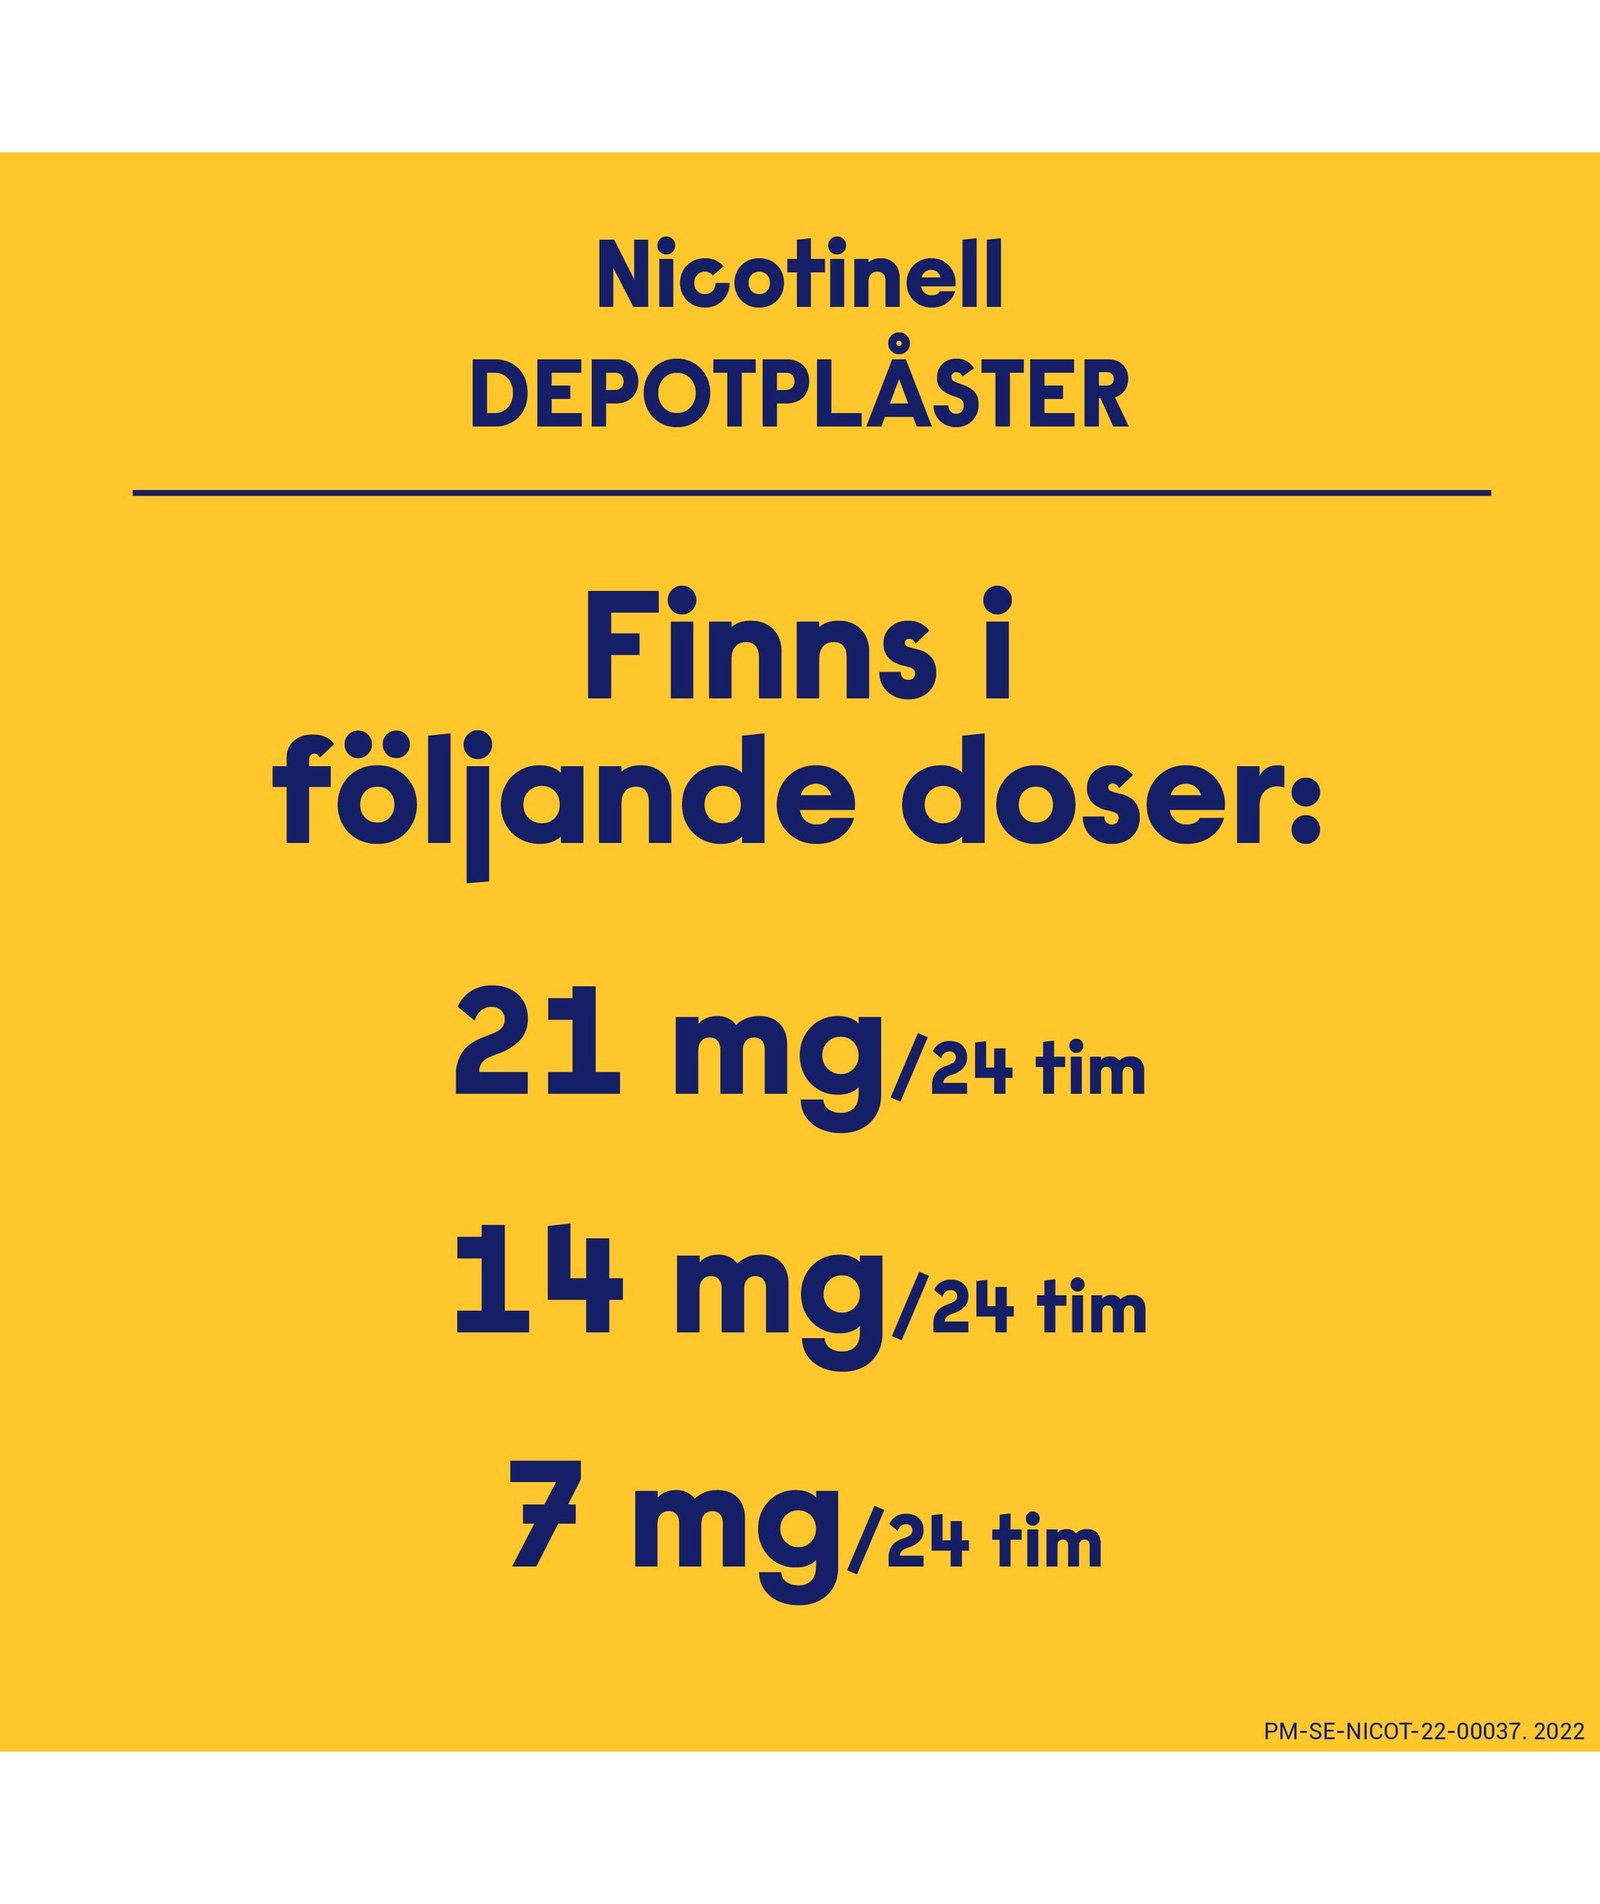 Nicotinell Nikotinplåster 14 mg/24 timmar Depotplåster 7 st